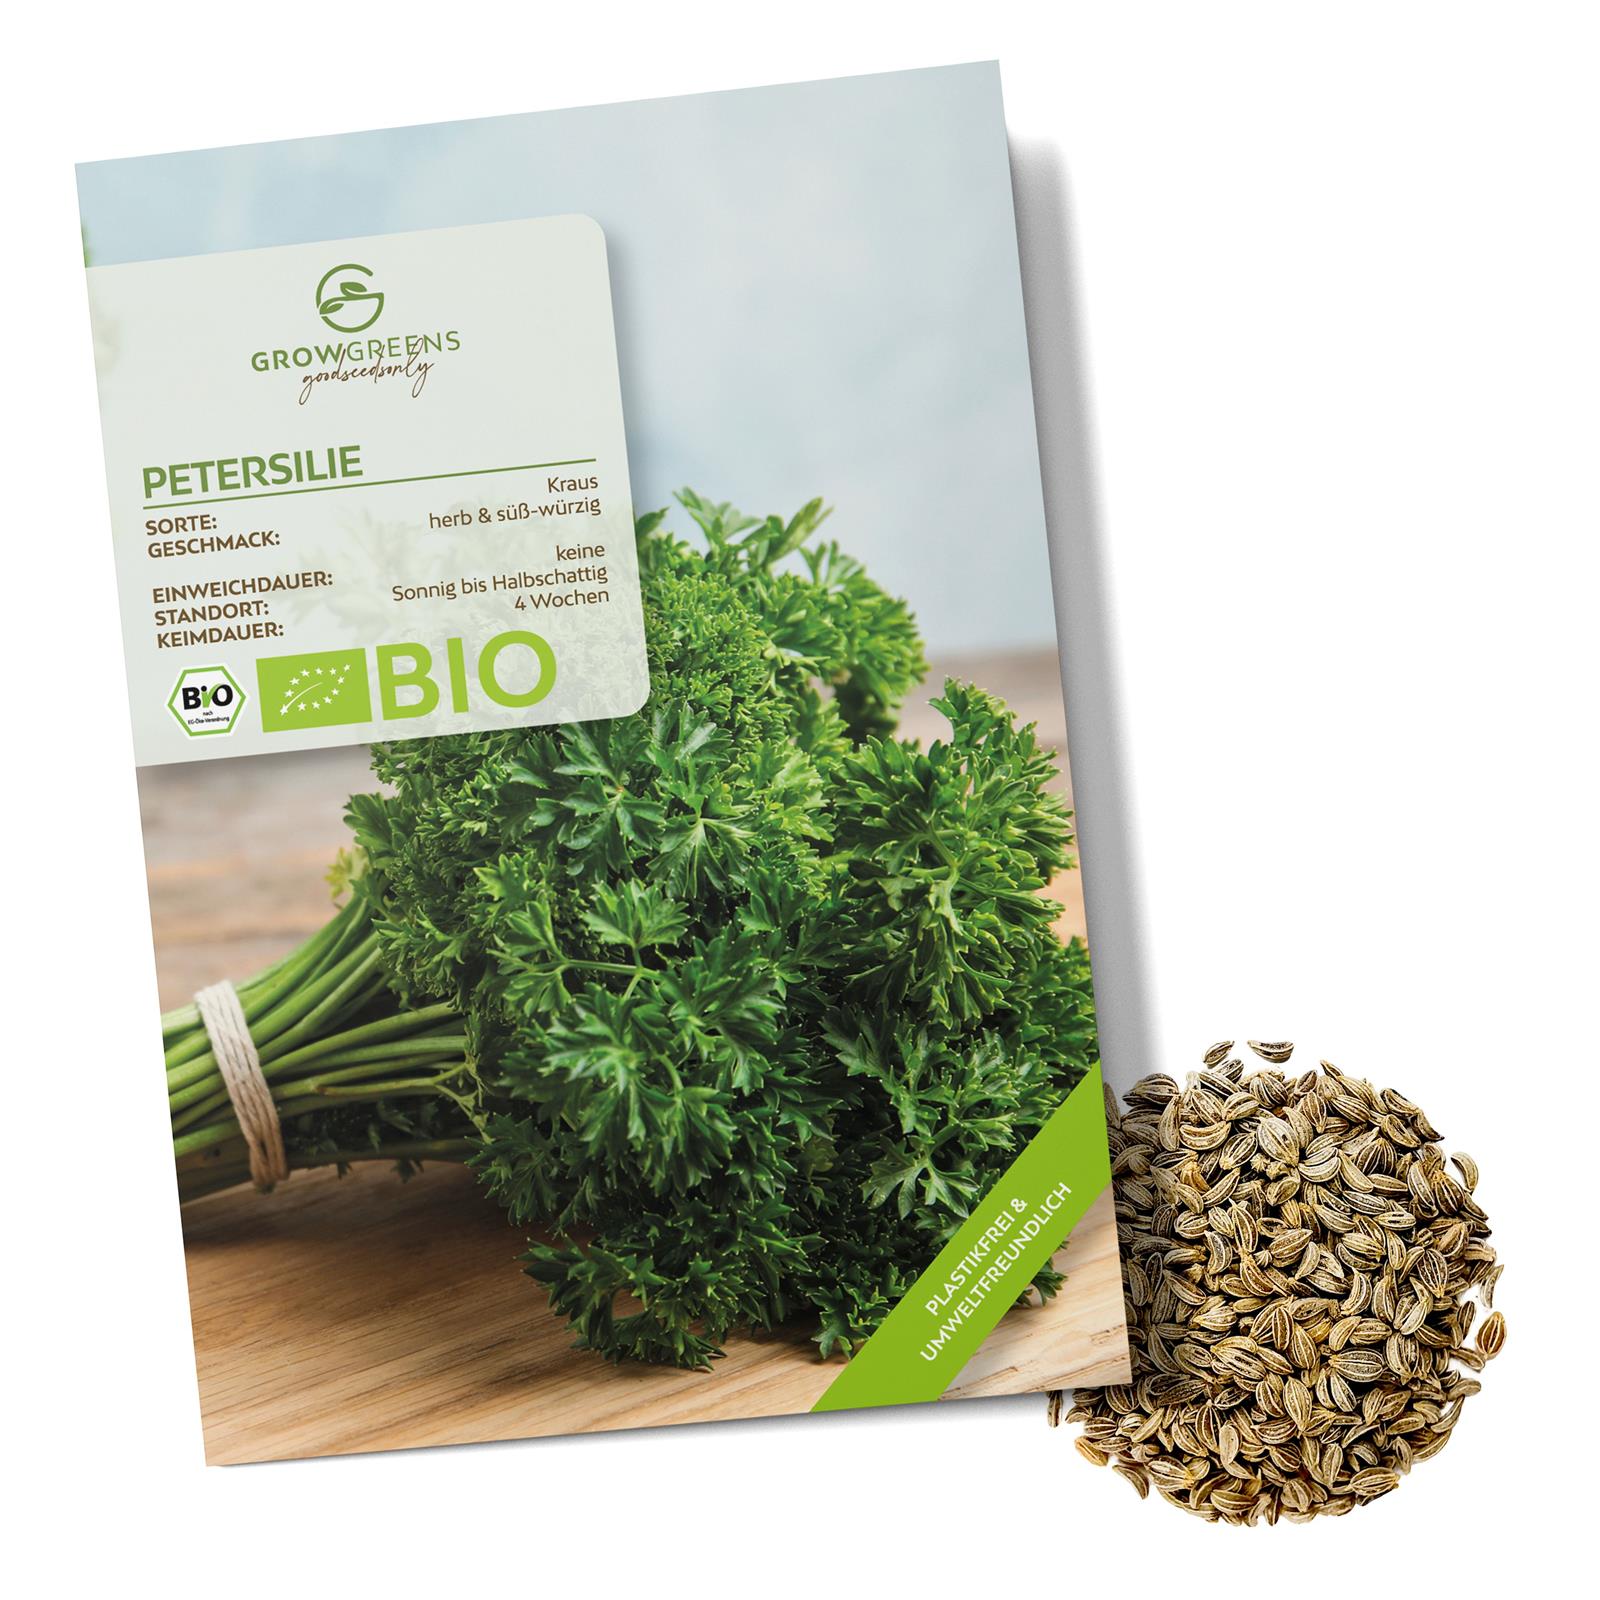 BIO Petersilie Samen kraus - Küchenkräuter Saatgut aus biologischem Anbau (400 Korn)